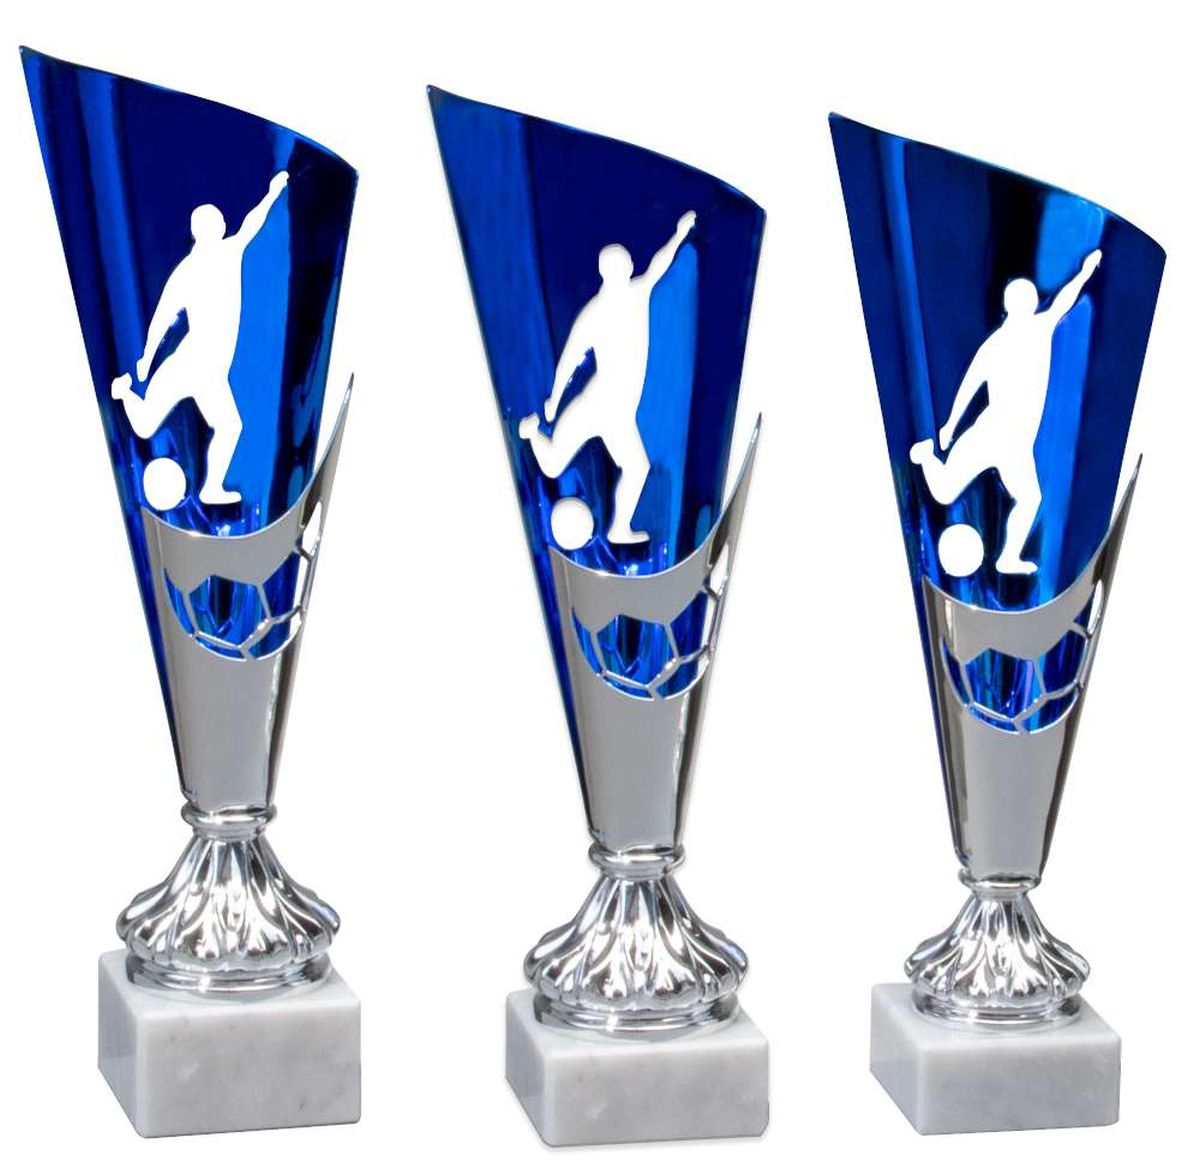 Pokal Soccer Silber/Blau - Größe: 330mm